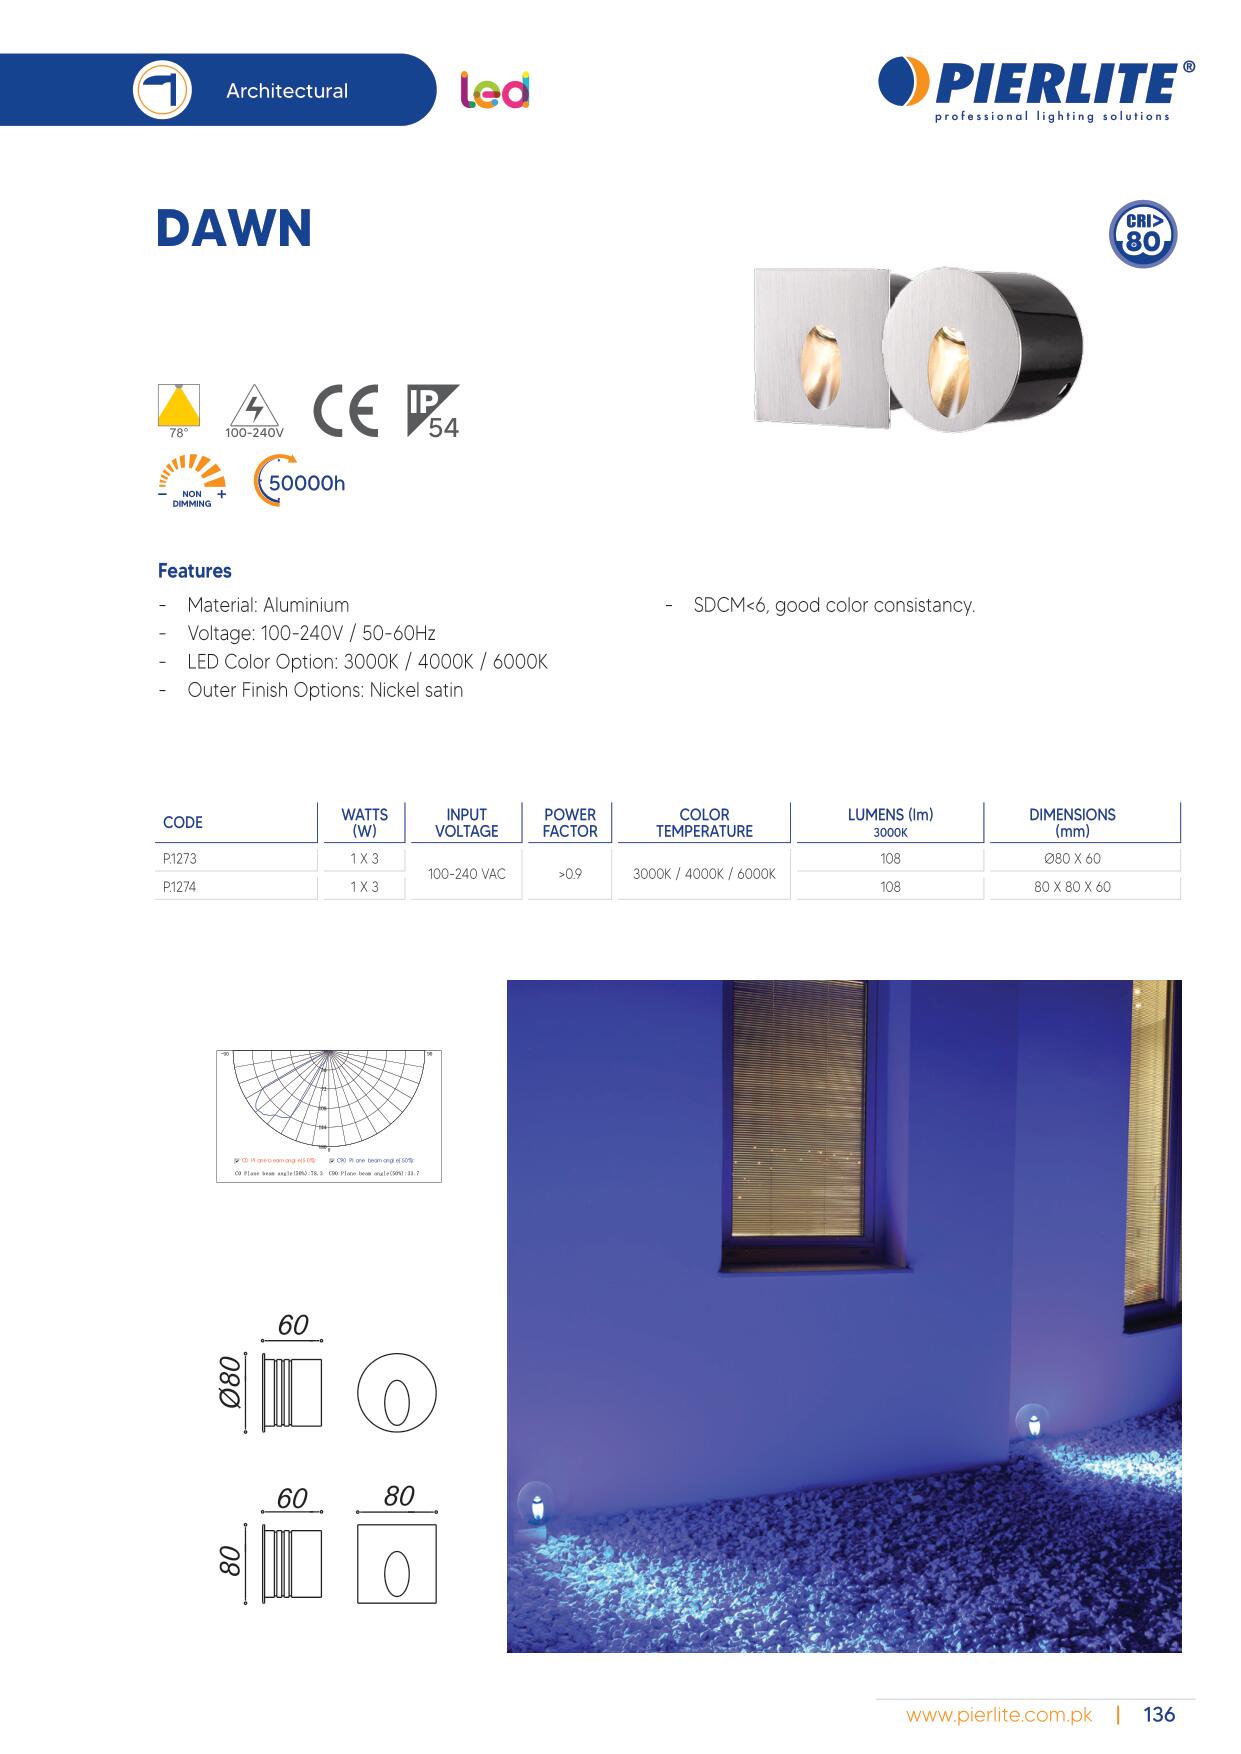 Pierlite LED Luminaire Catalog 2021-145